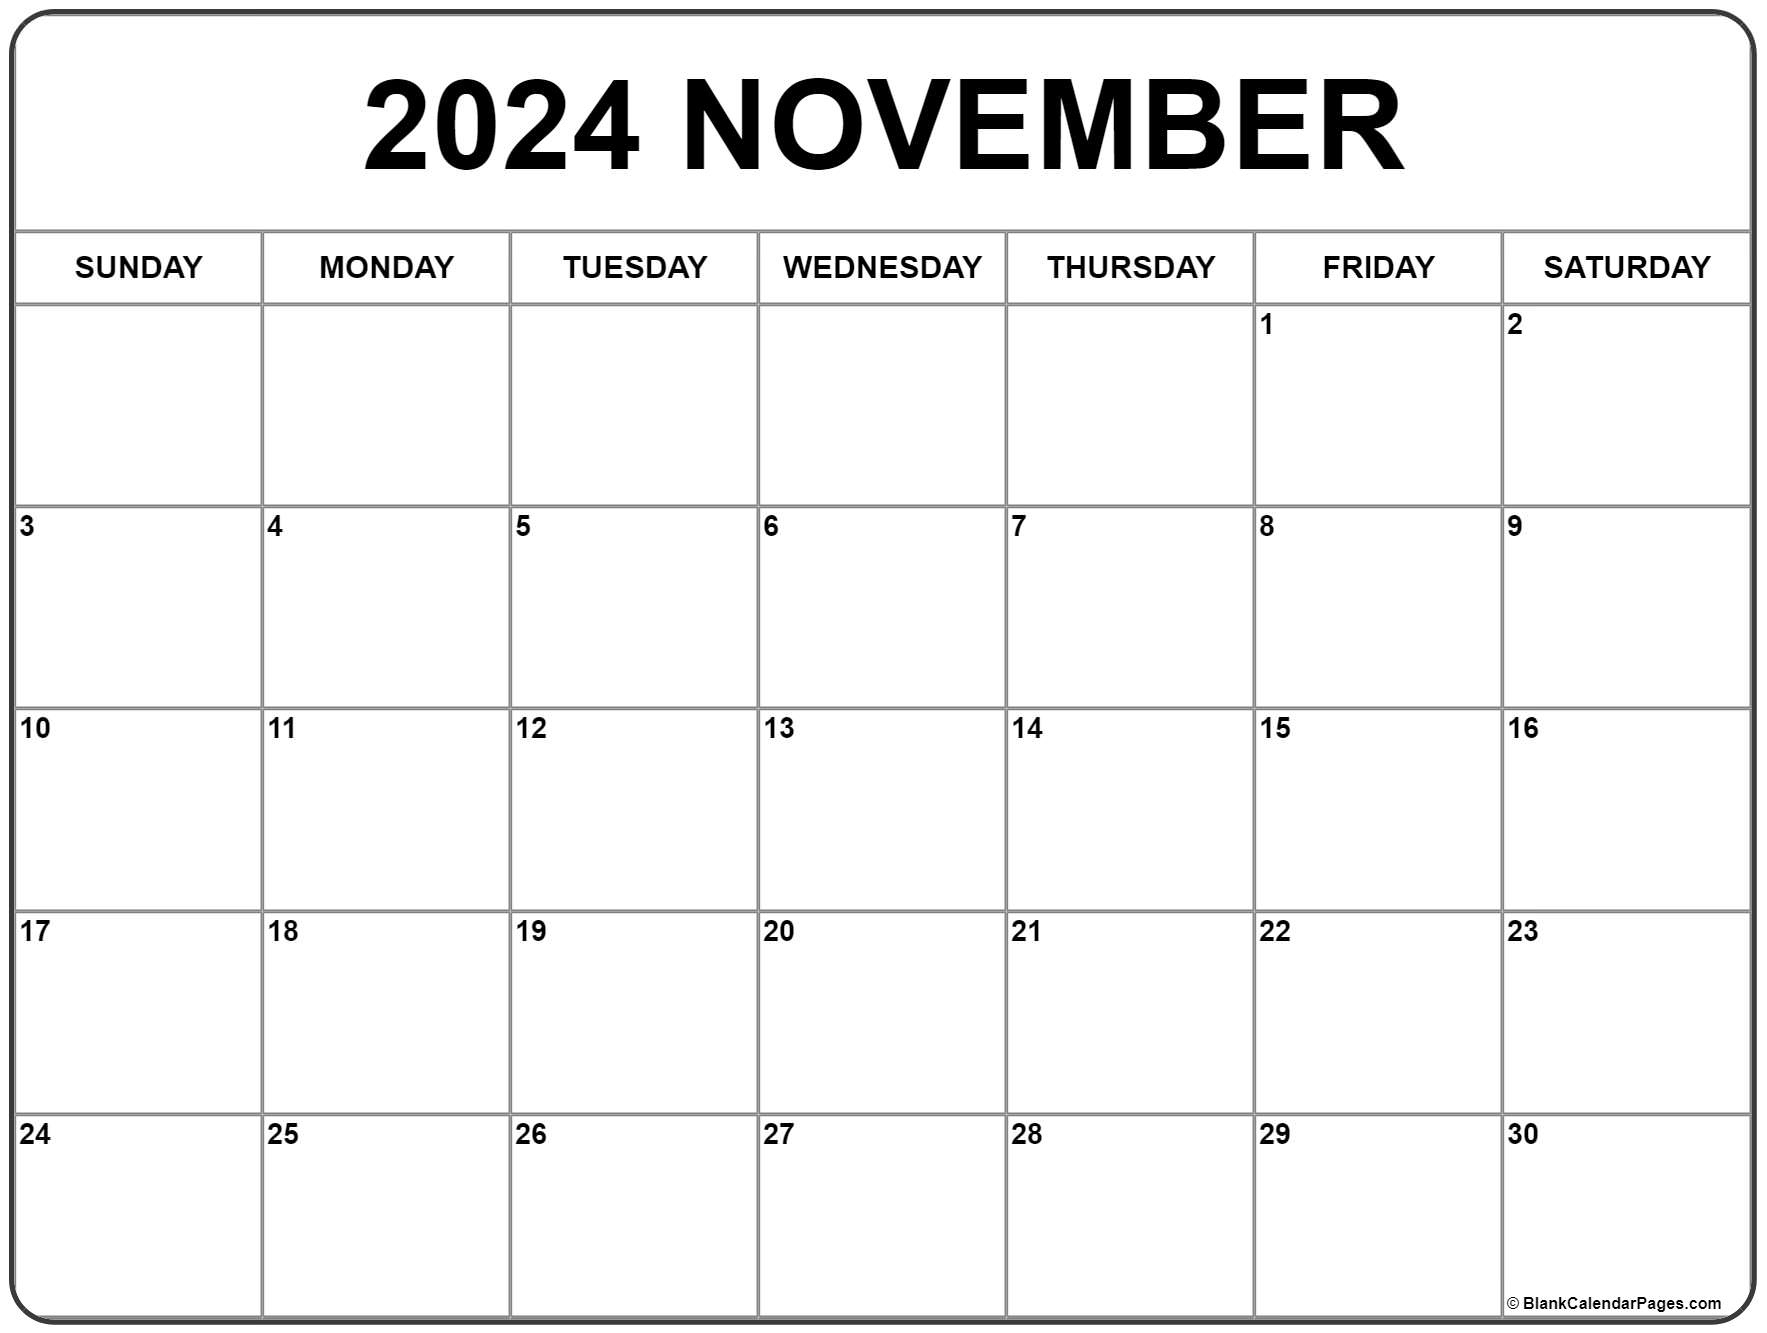 November 2024 Calendar | Free Printable Calendar | Printable Calendar 2024 November